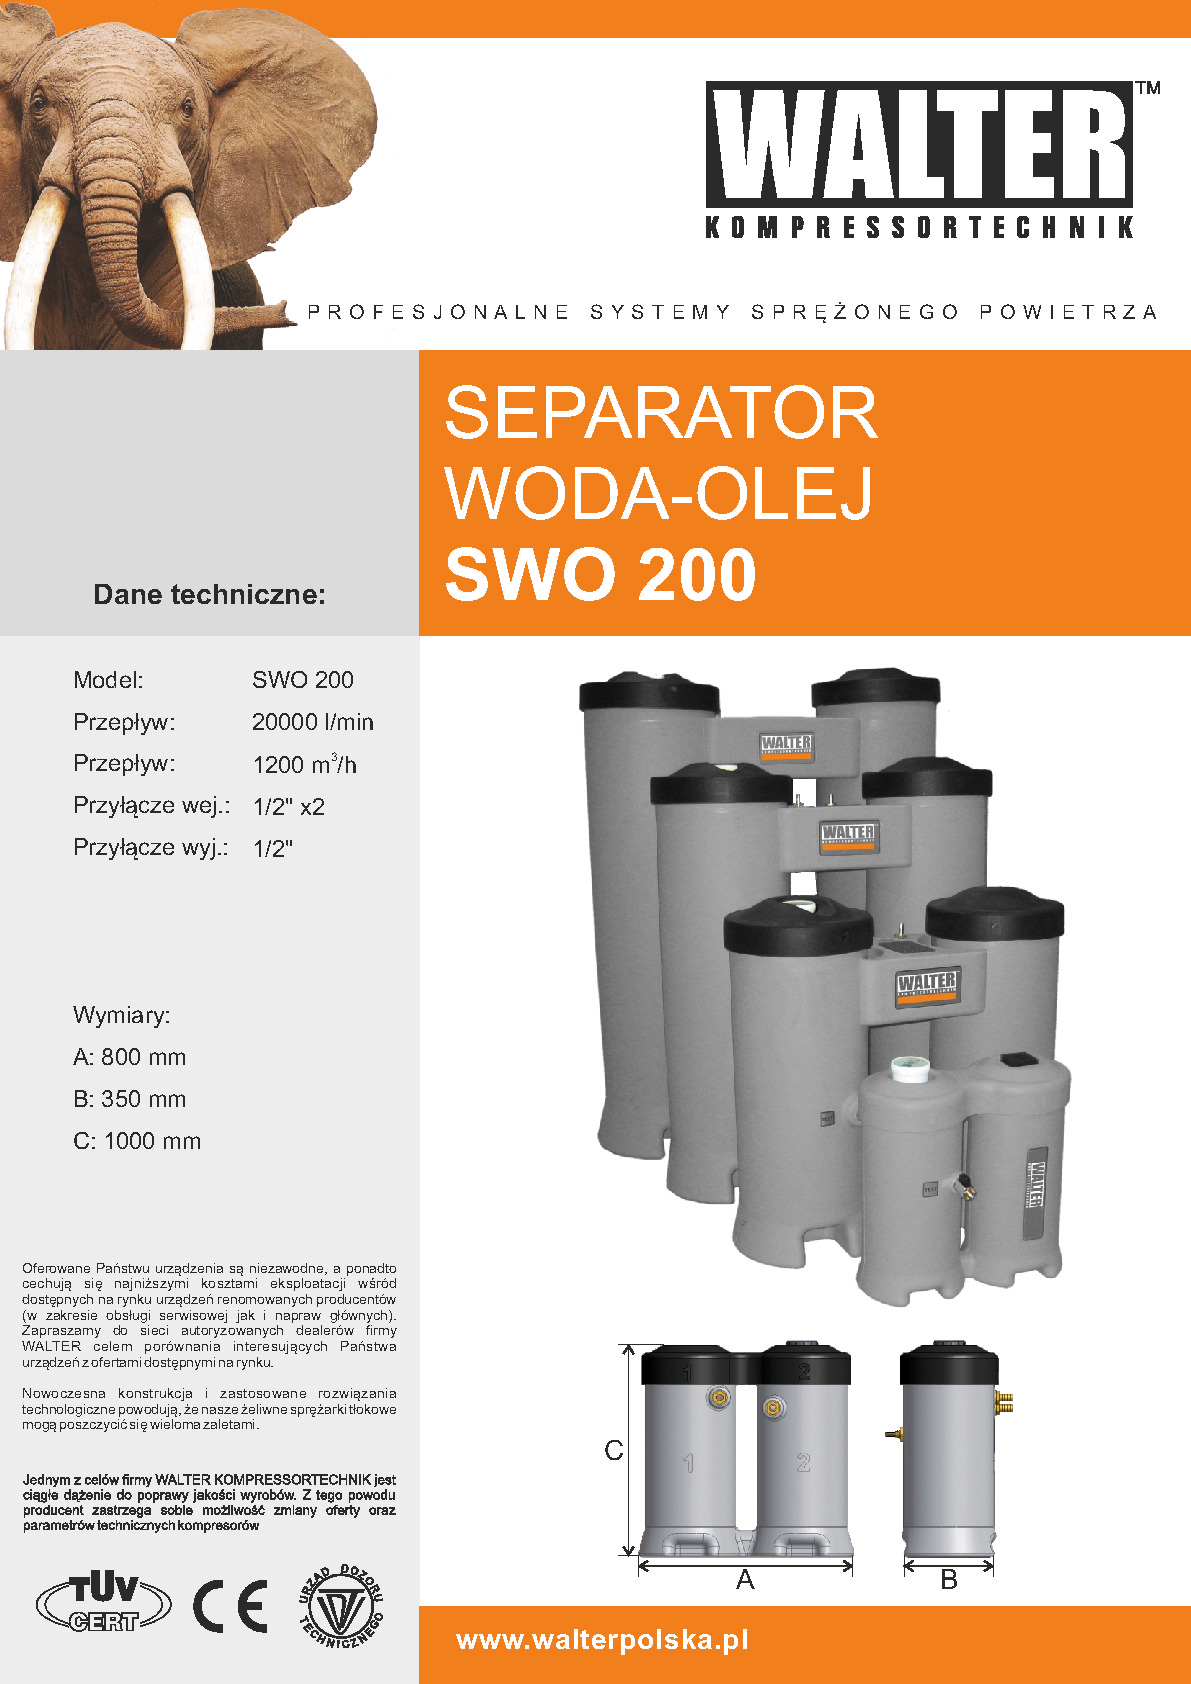 Separator SWO 200